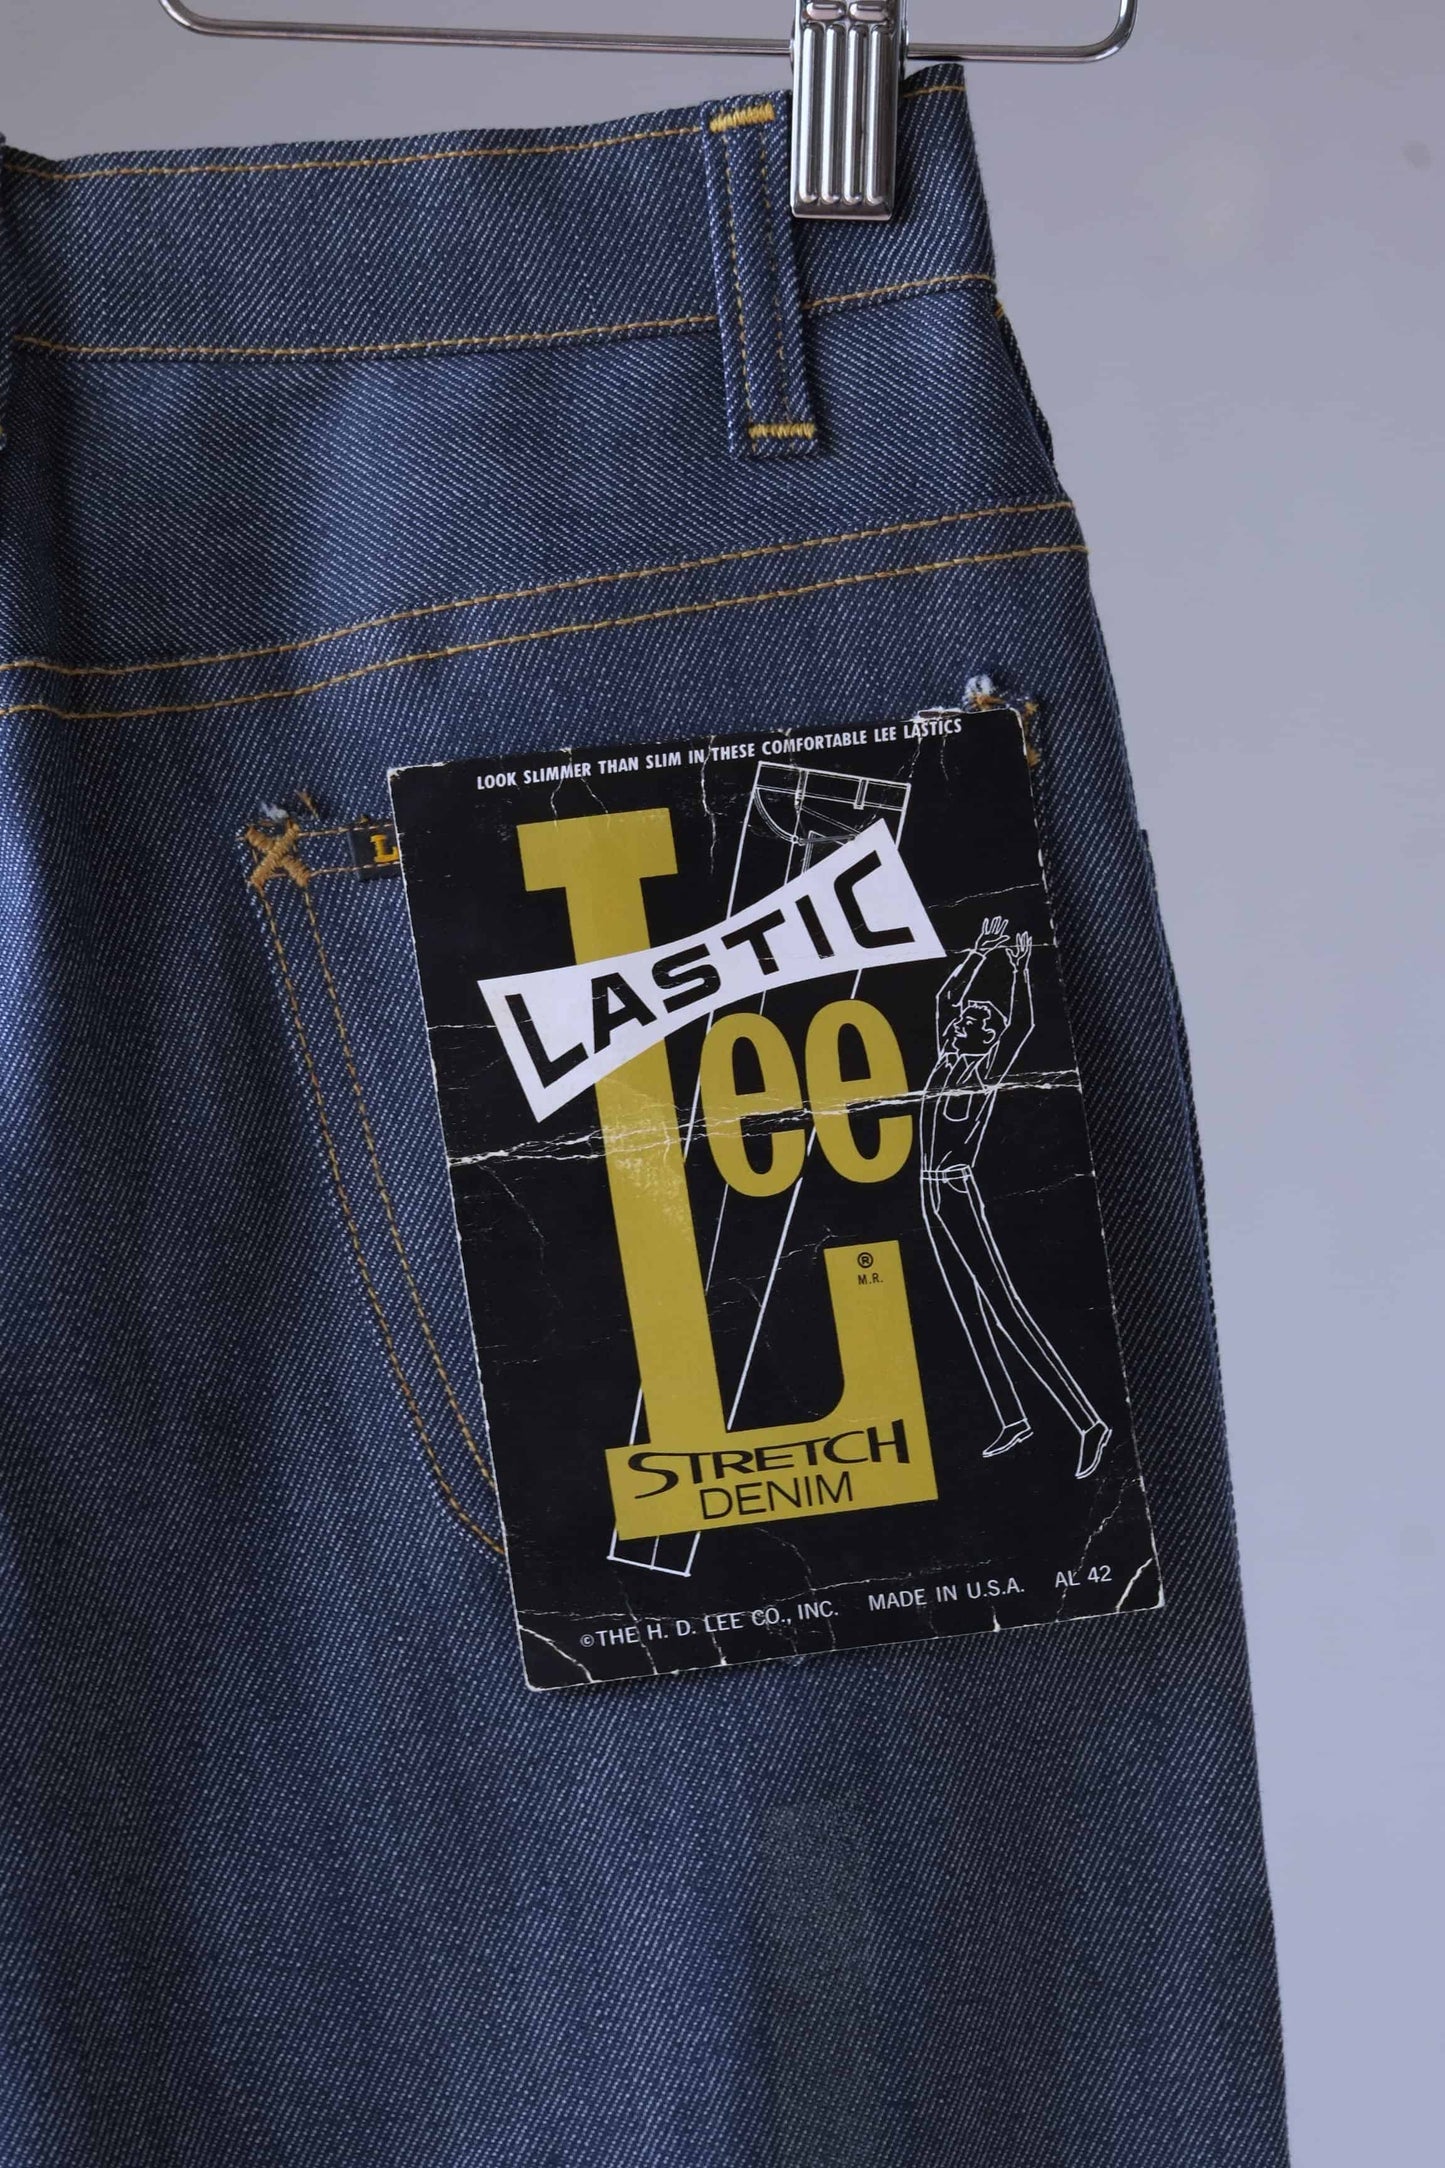 Close shot of the label on the back pocket of a vintage Lee lastic jeans